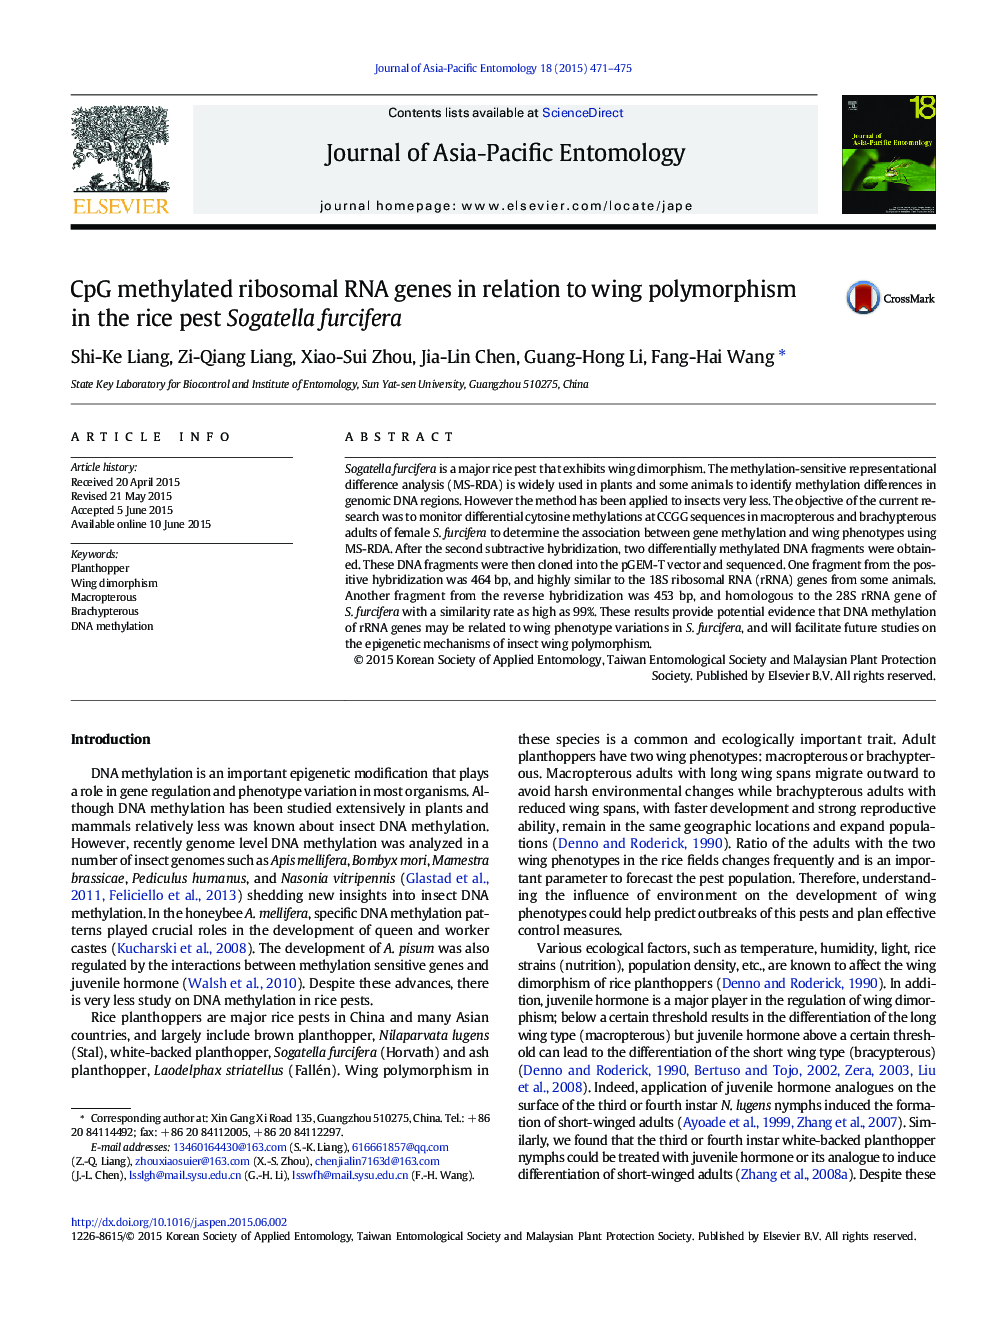 CpG methylated ribosomal RNA genes in relation to wing polymorphism in the rice pest Sogatella furcifera